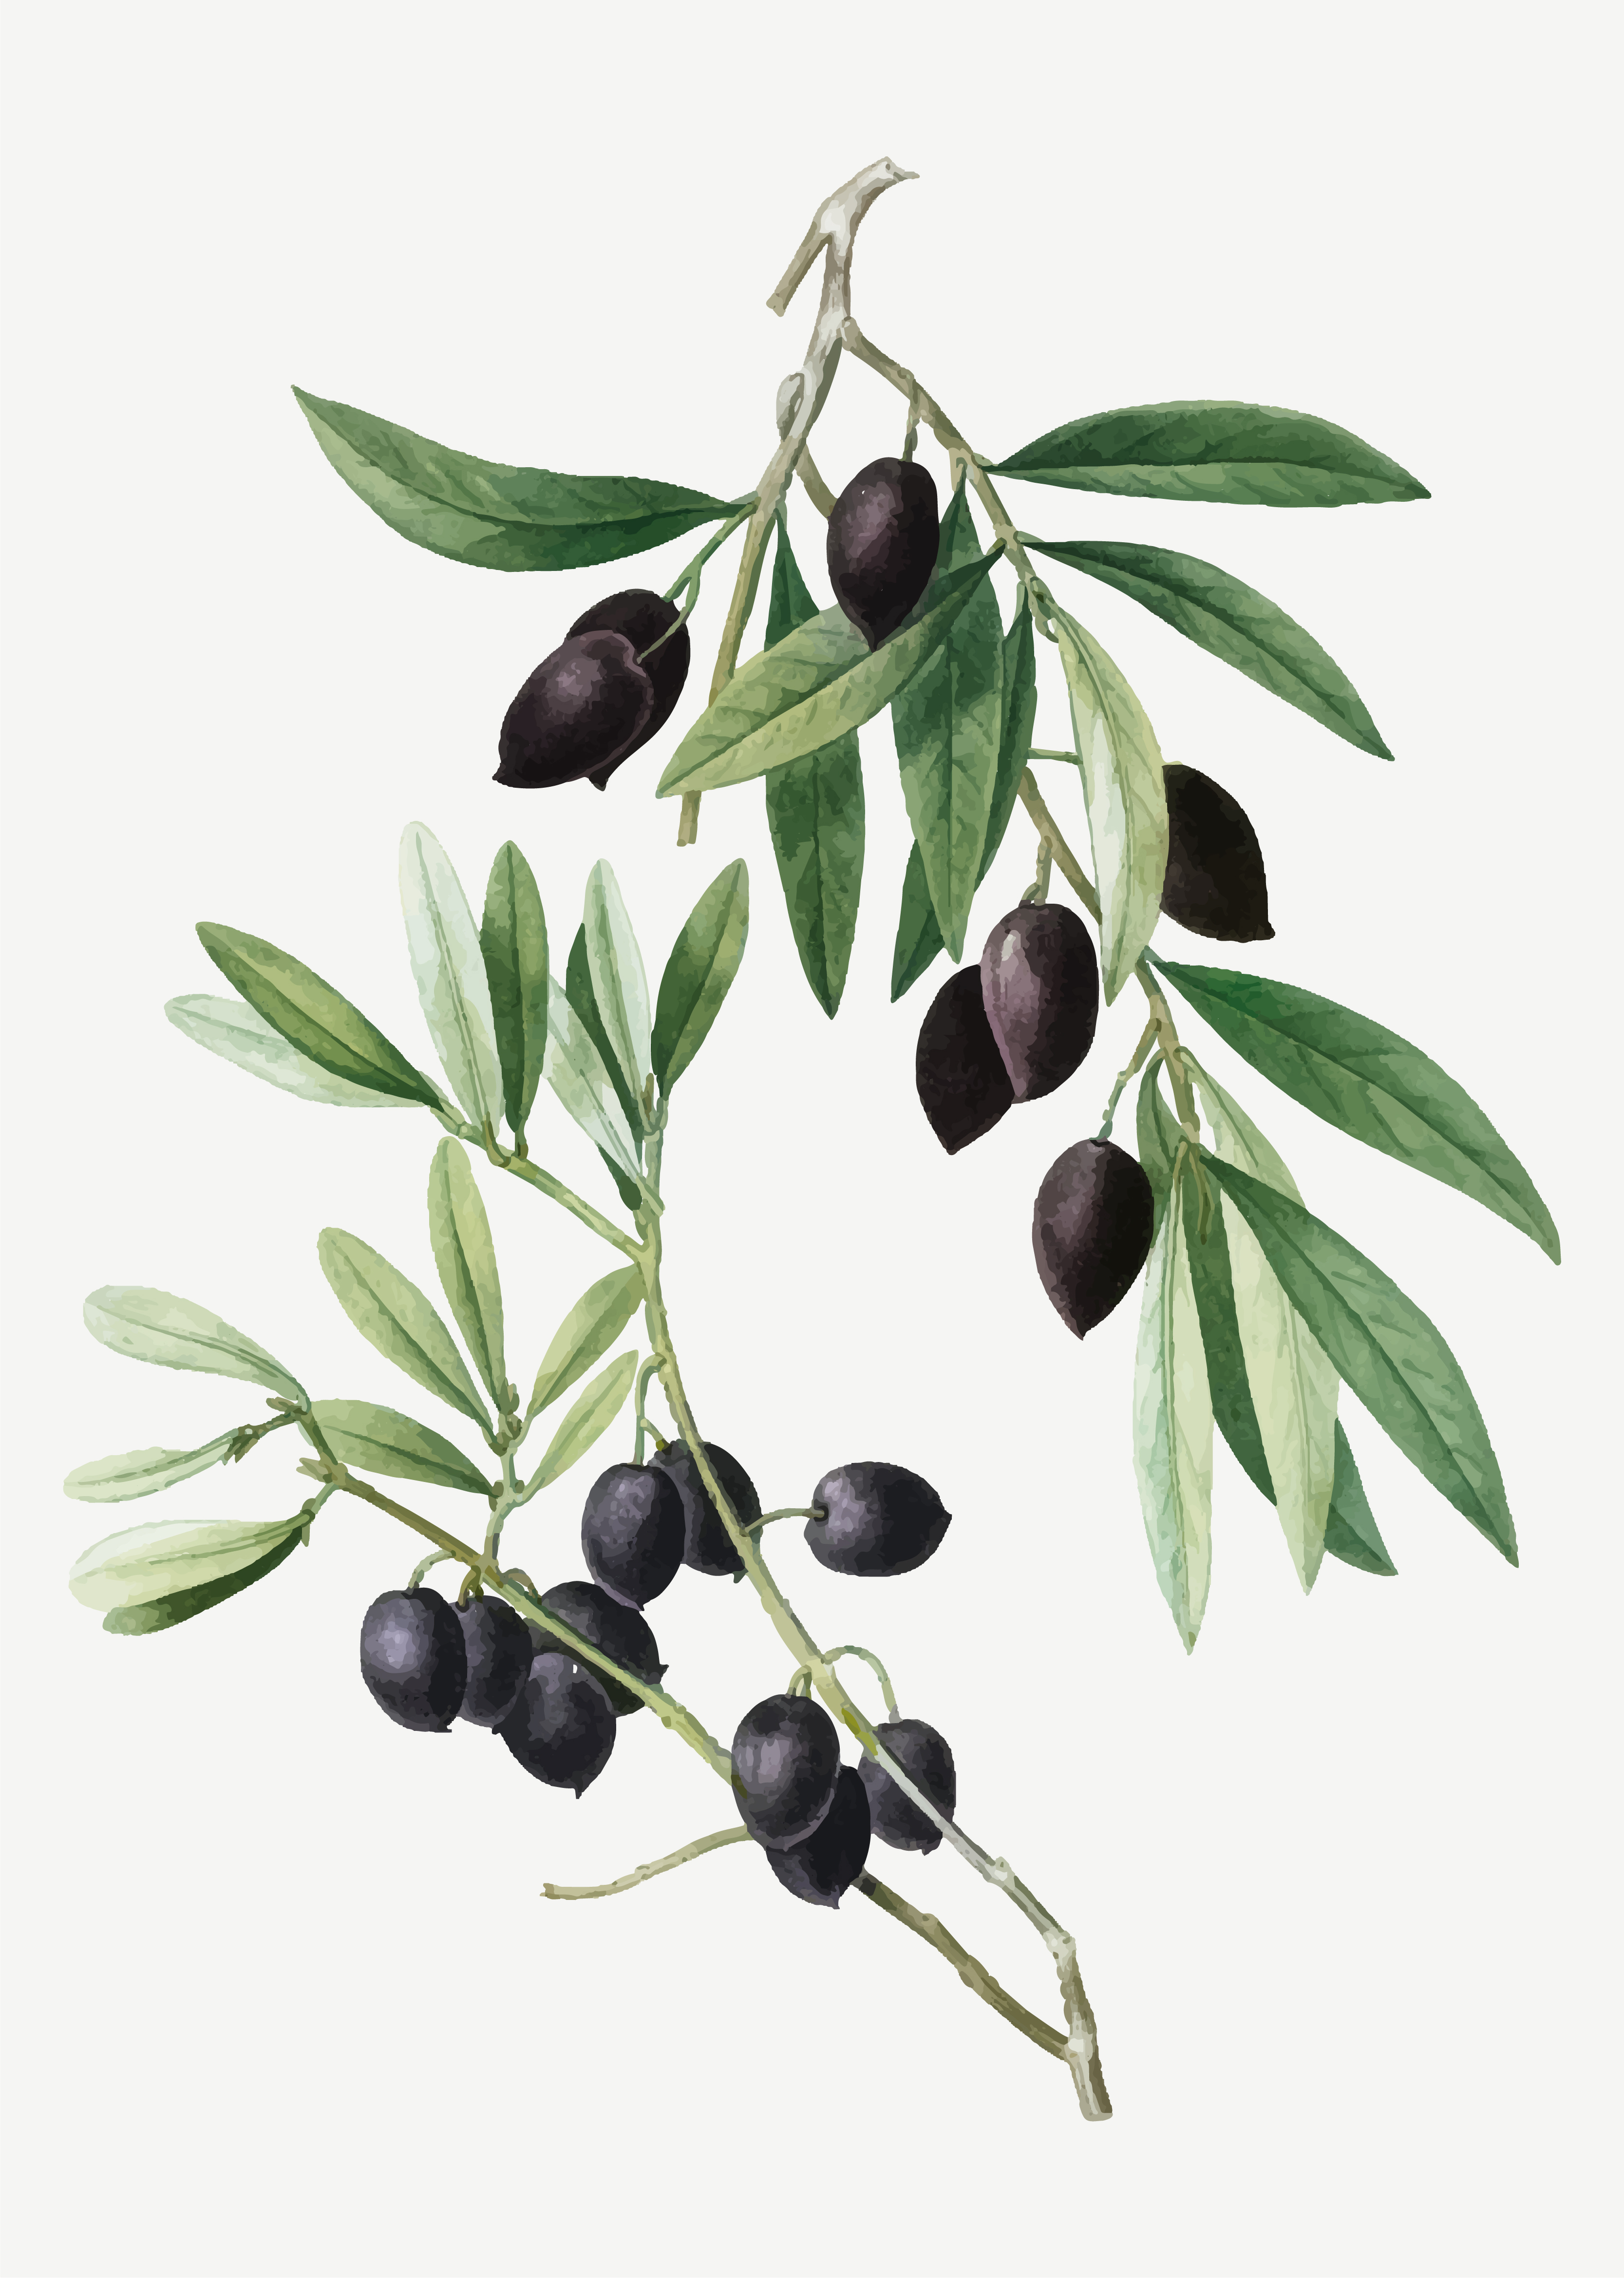 Olive tree branch - Download Free Vectors, Clipart Graphics & Vector Art